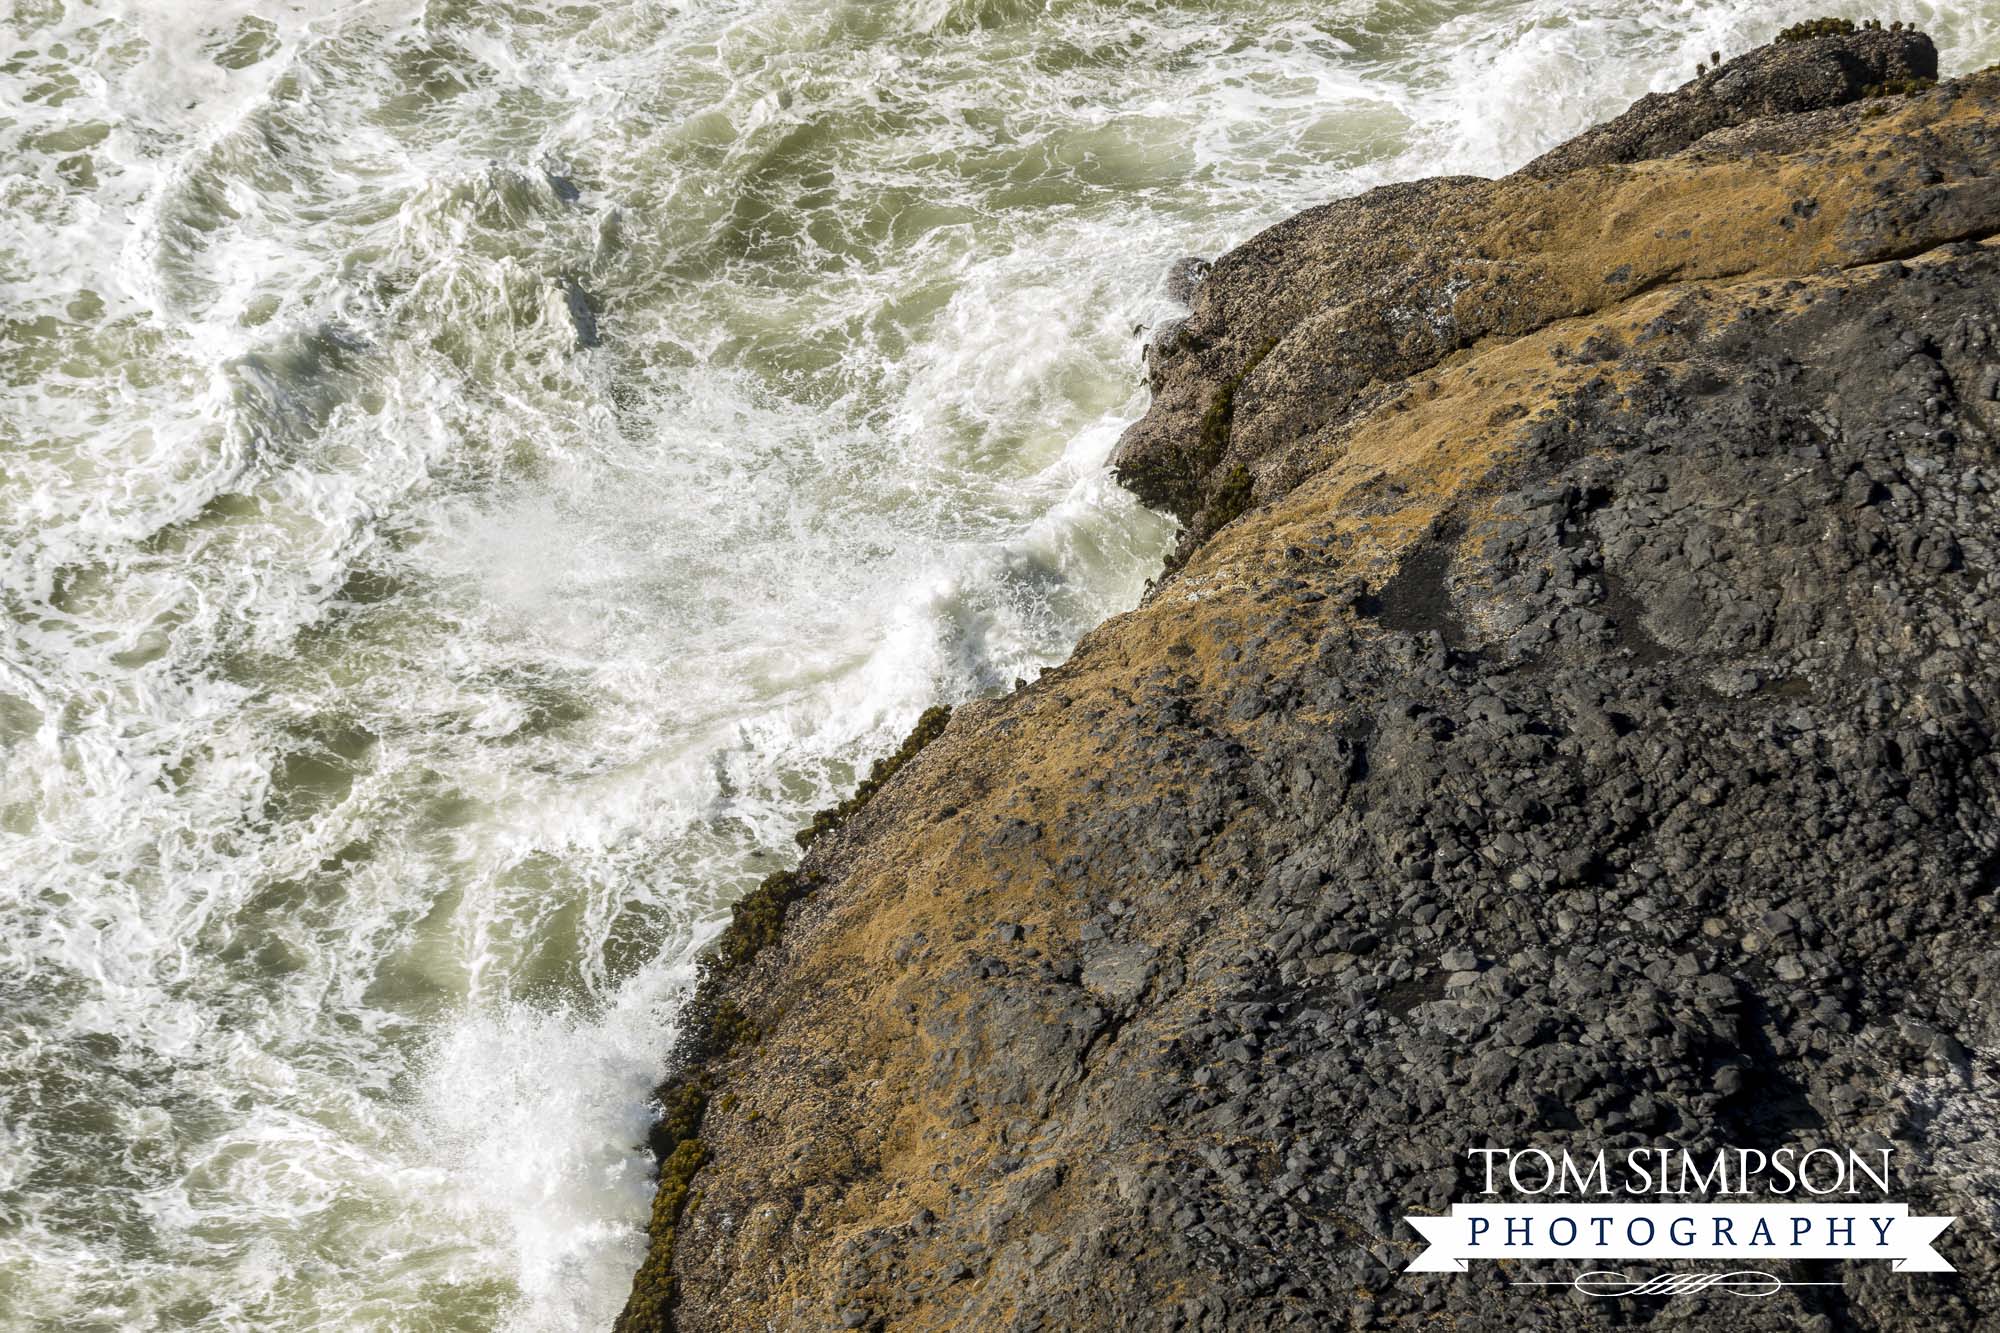 beautiful scenic viewpoint shows waves splashing on rocks